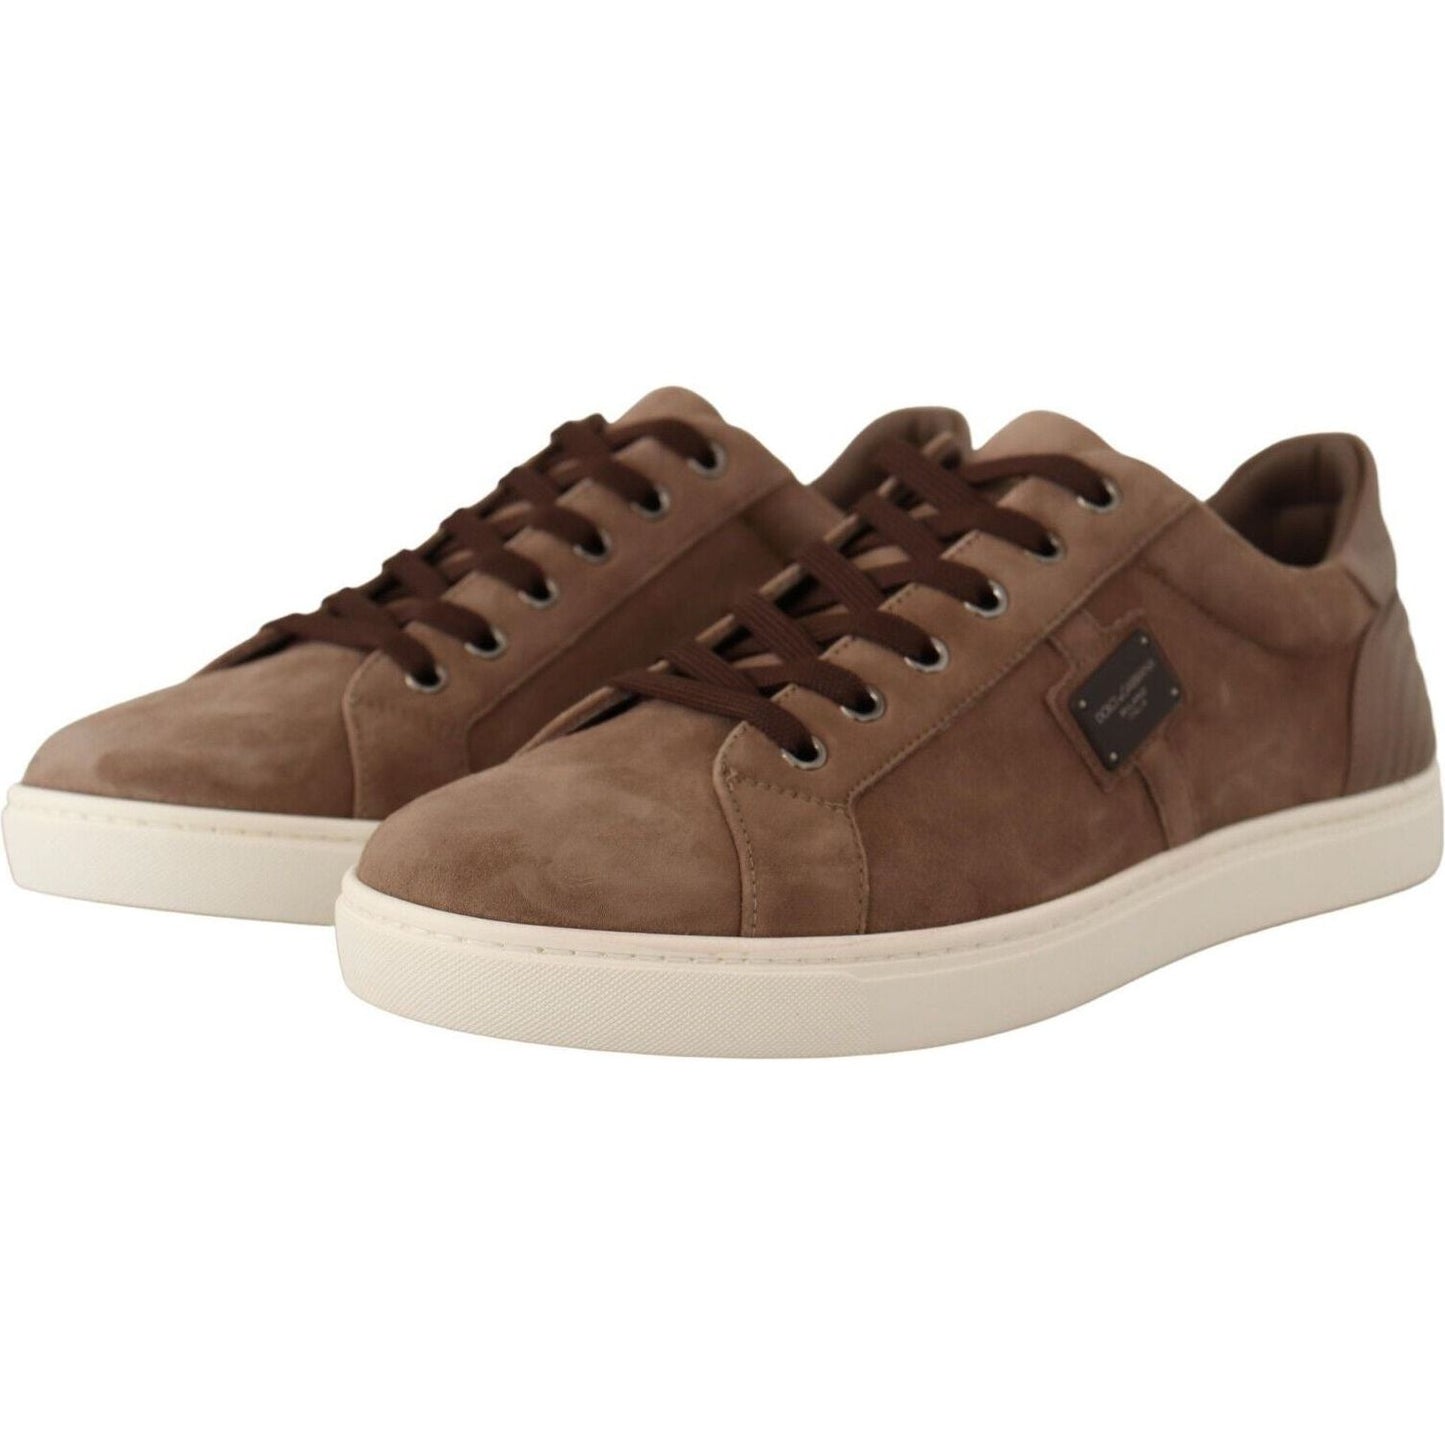 Dolce & Gabbana Elegant Brown Leather Sneakers for Men brown-suede-leather-sneakers-shoes